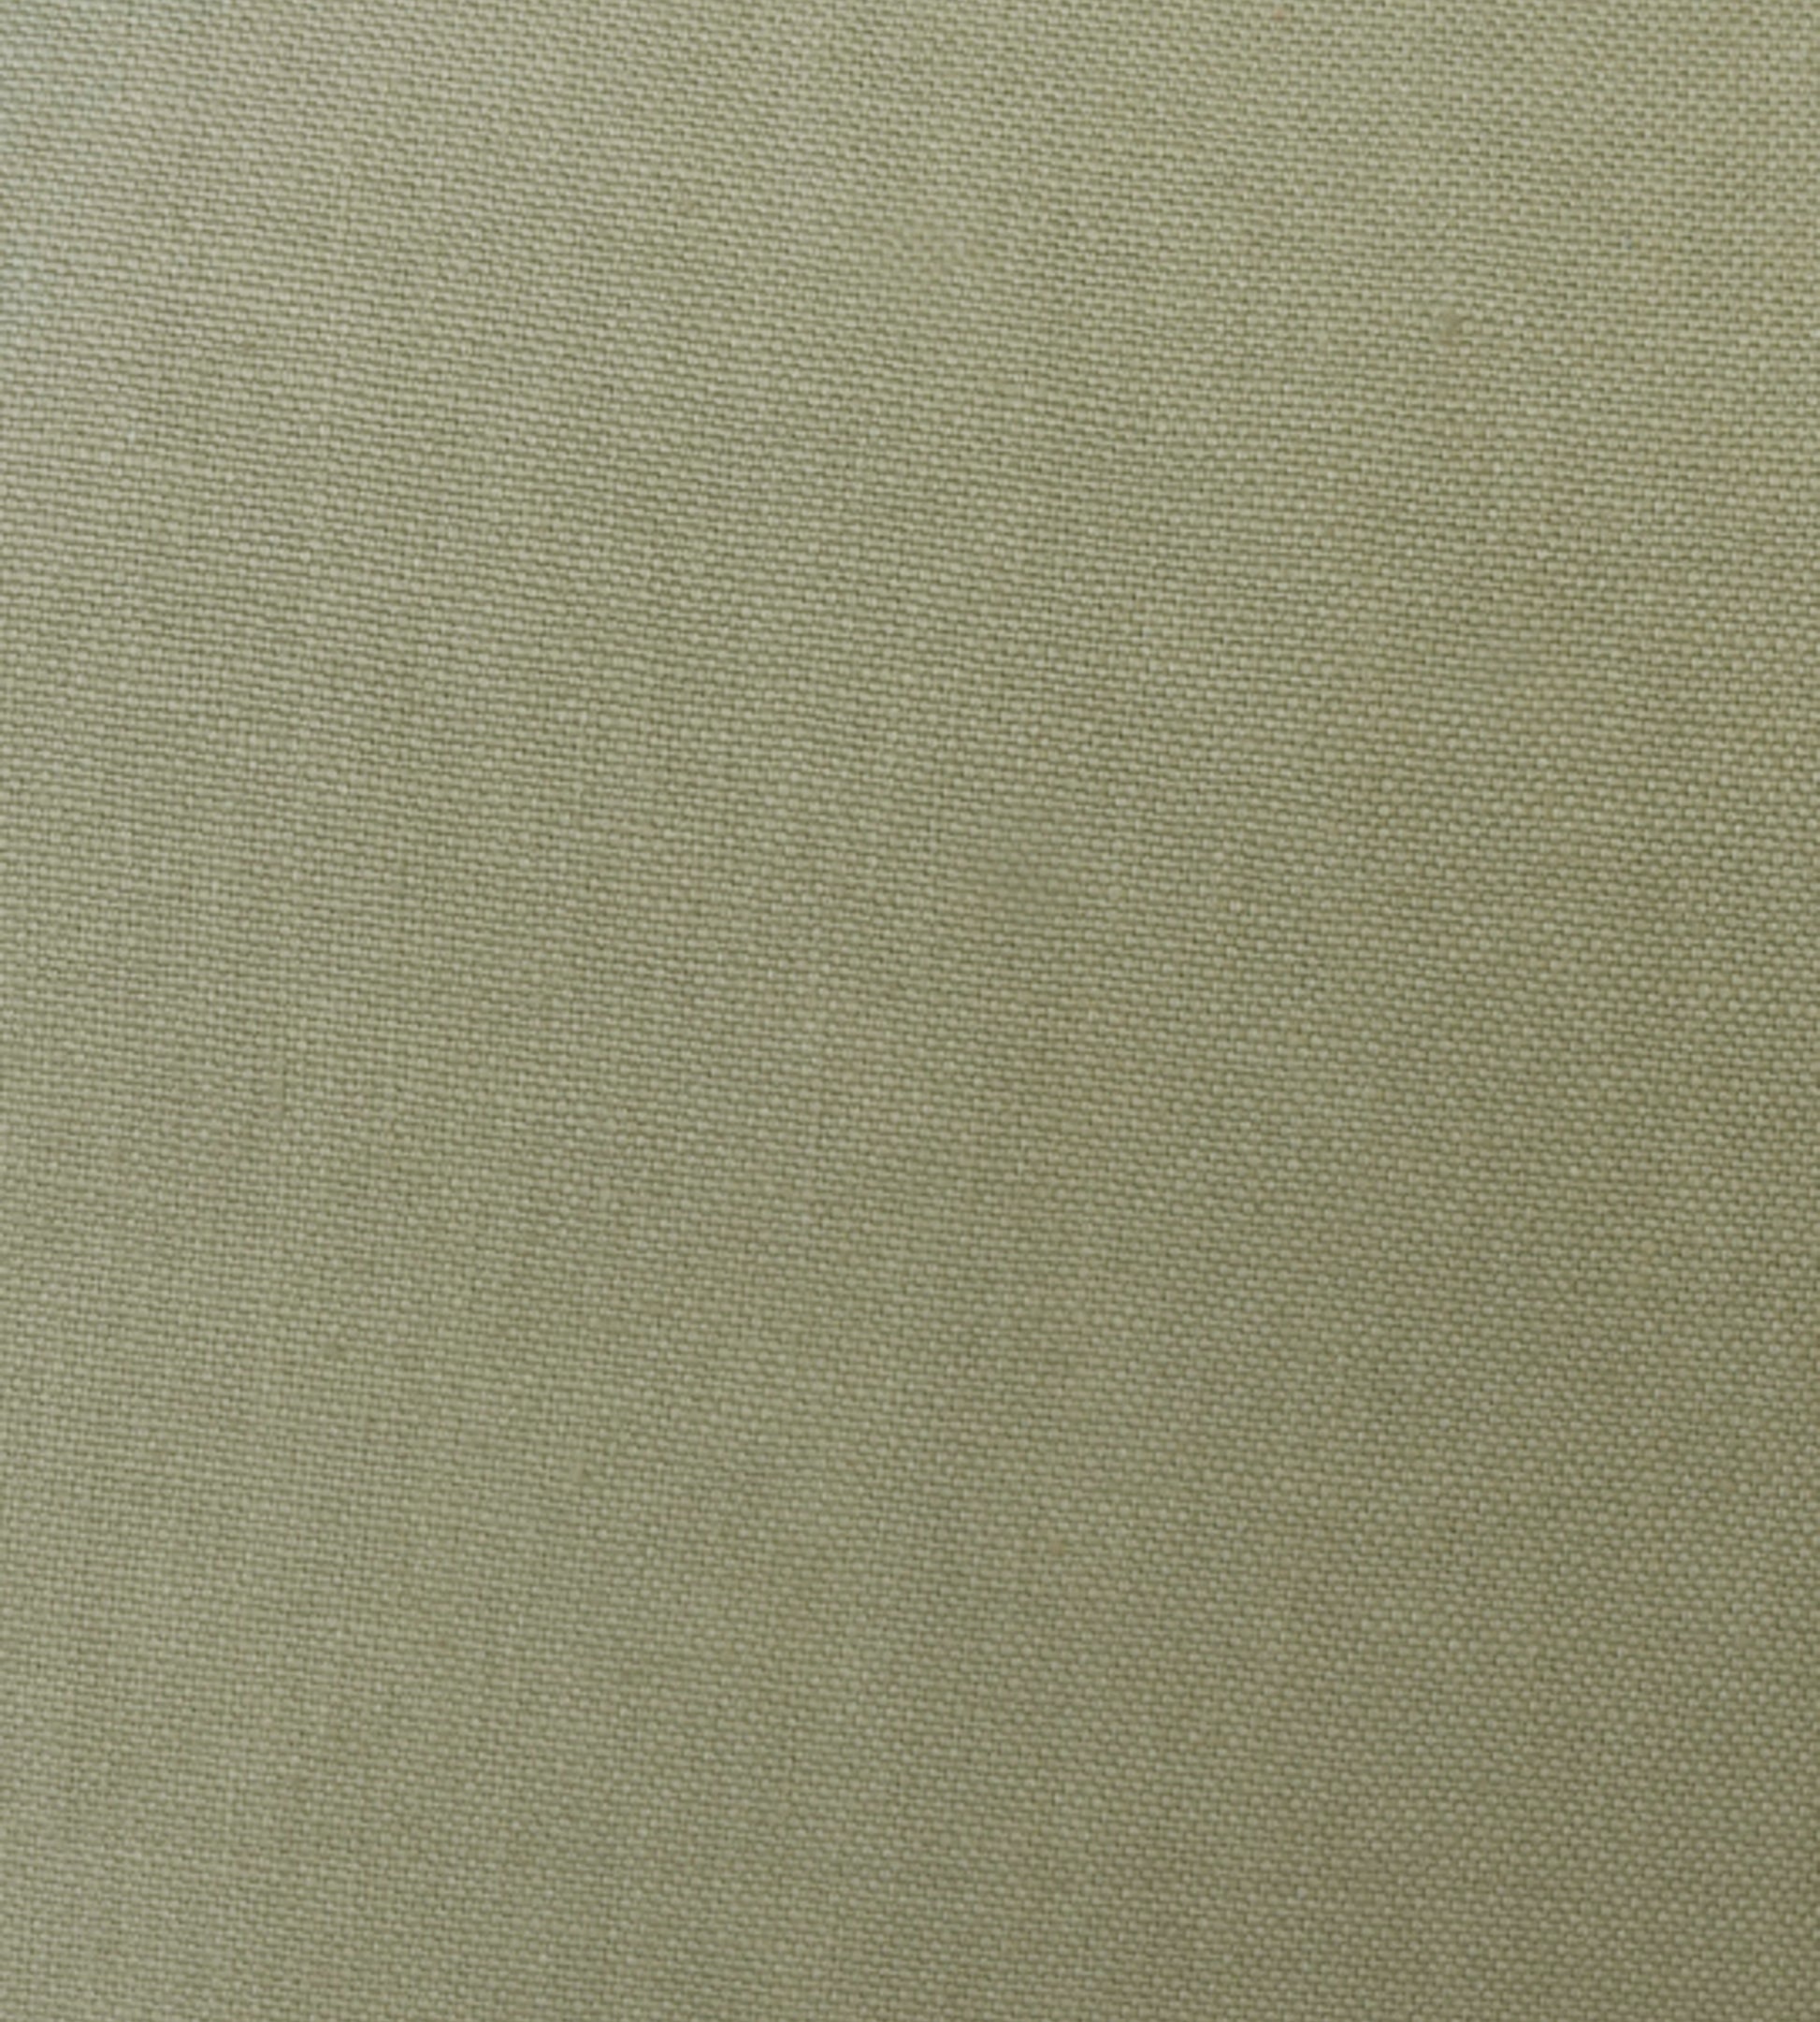 Purchase Scalamandre Fabric Item# SC 005627108, Toscana Linen Stone 1